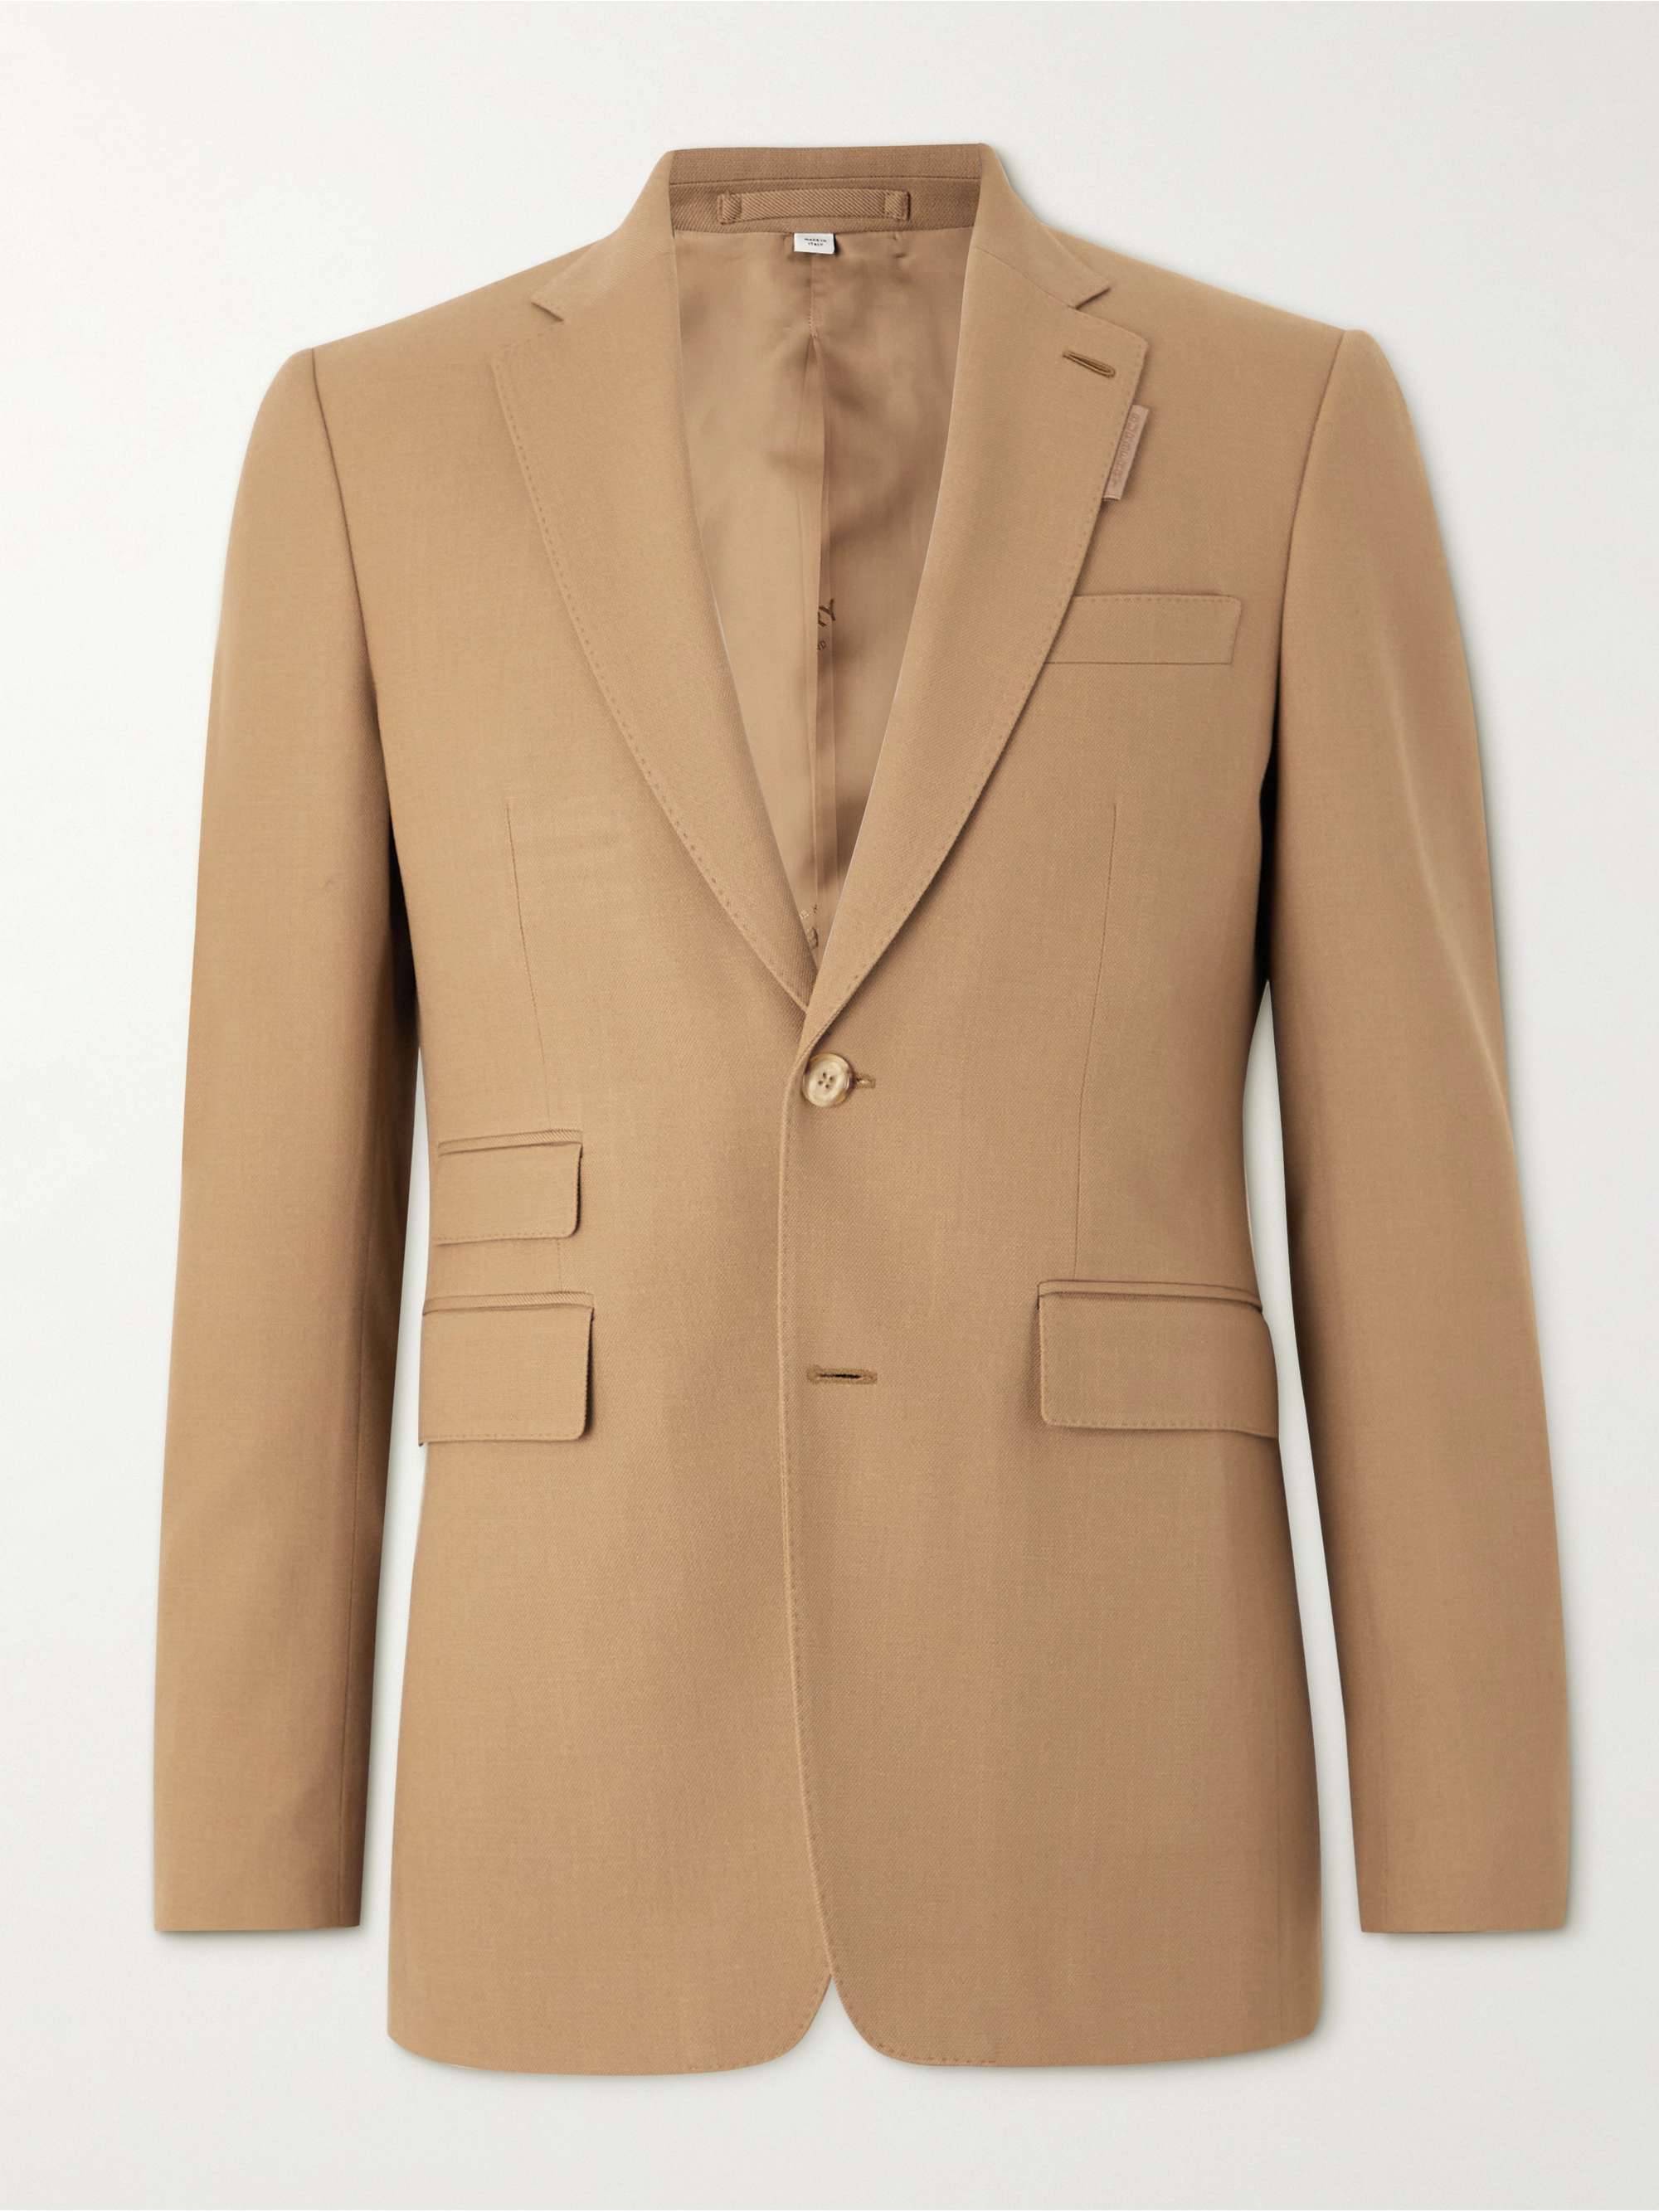 BURBERRY Wool and Silk-Blend Suit Jacket for Men | MR PORTER